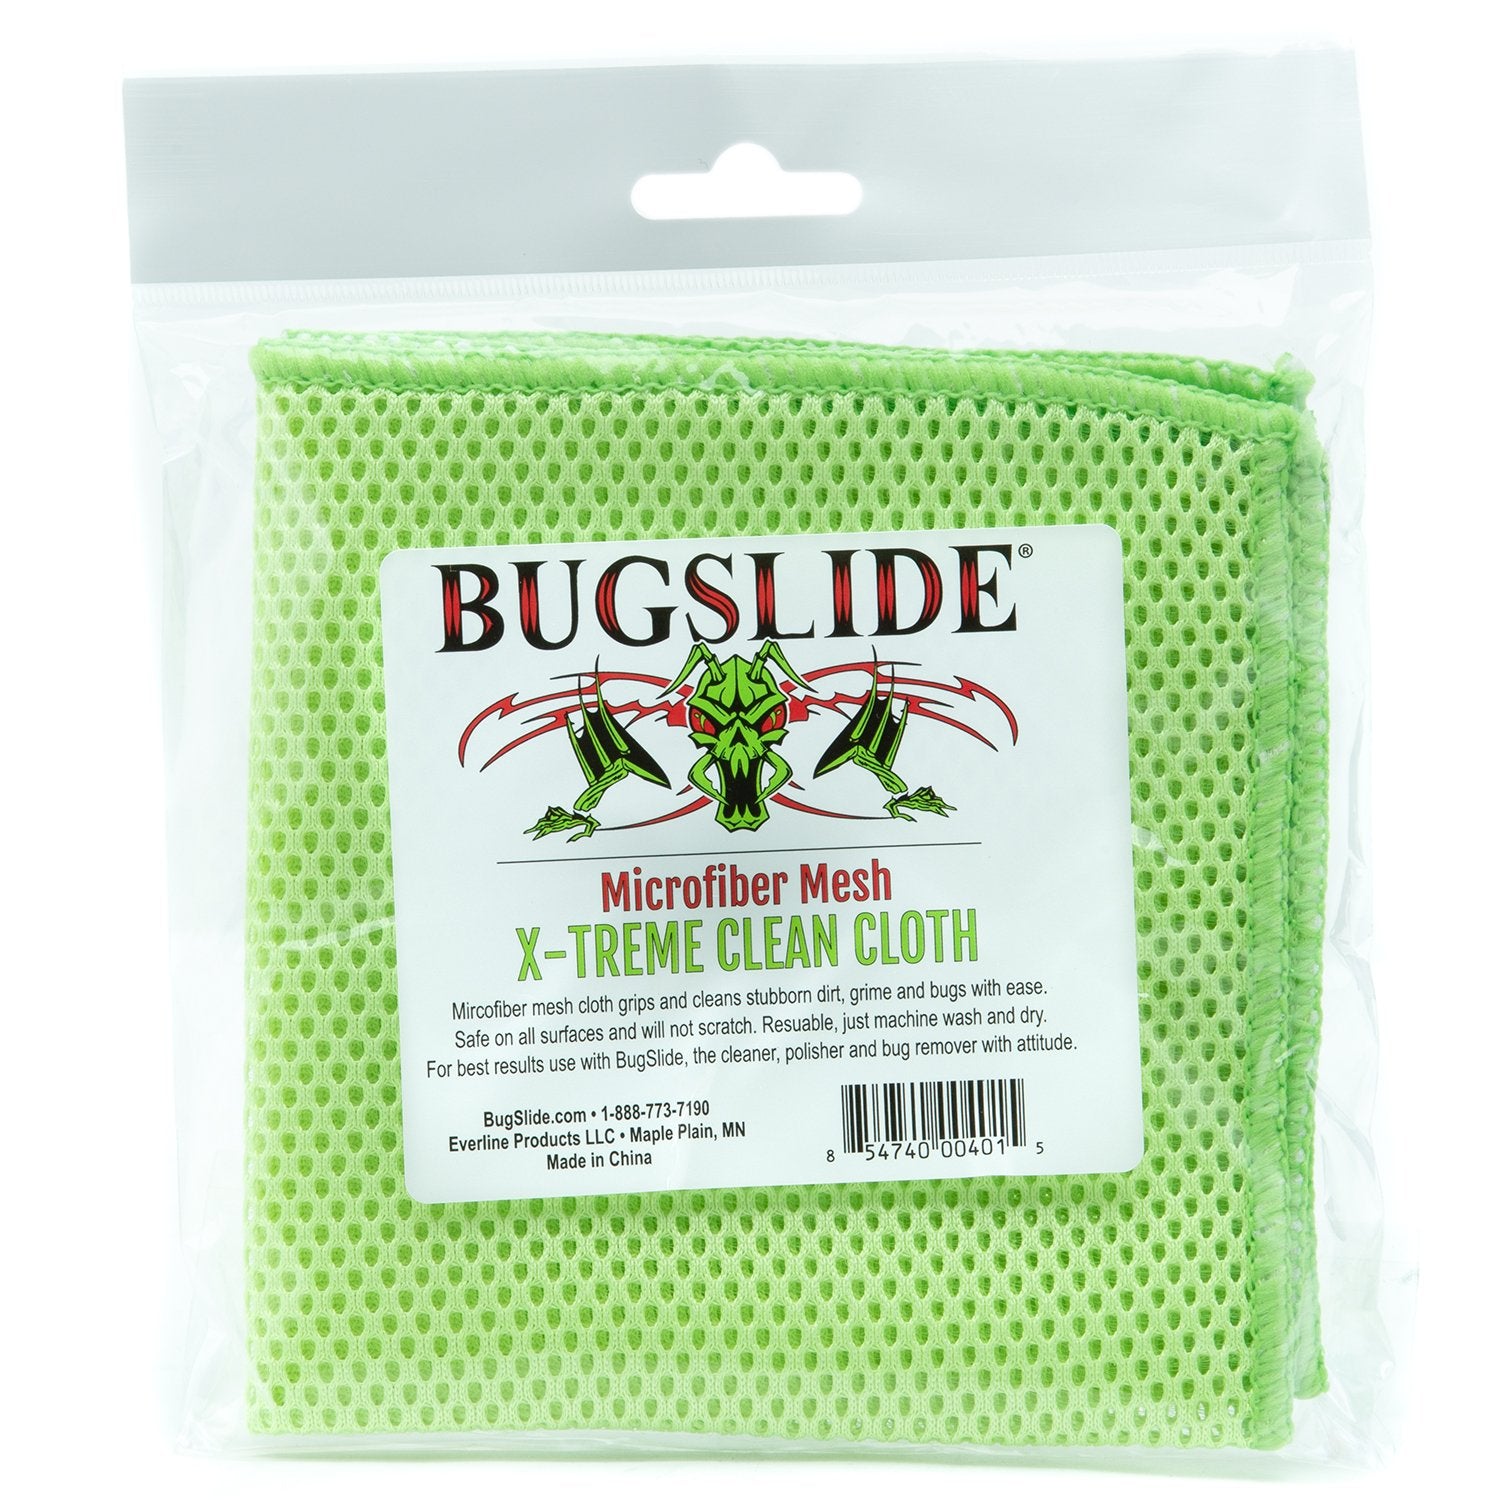 X-treme Clean Cloth – BugSlide